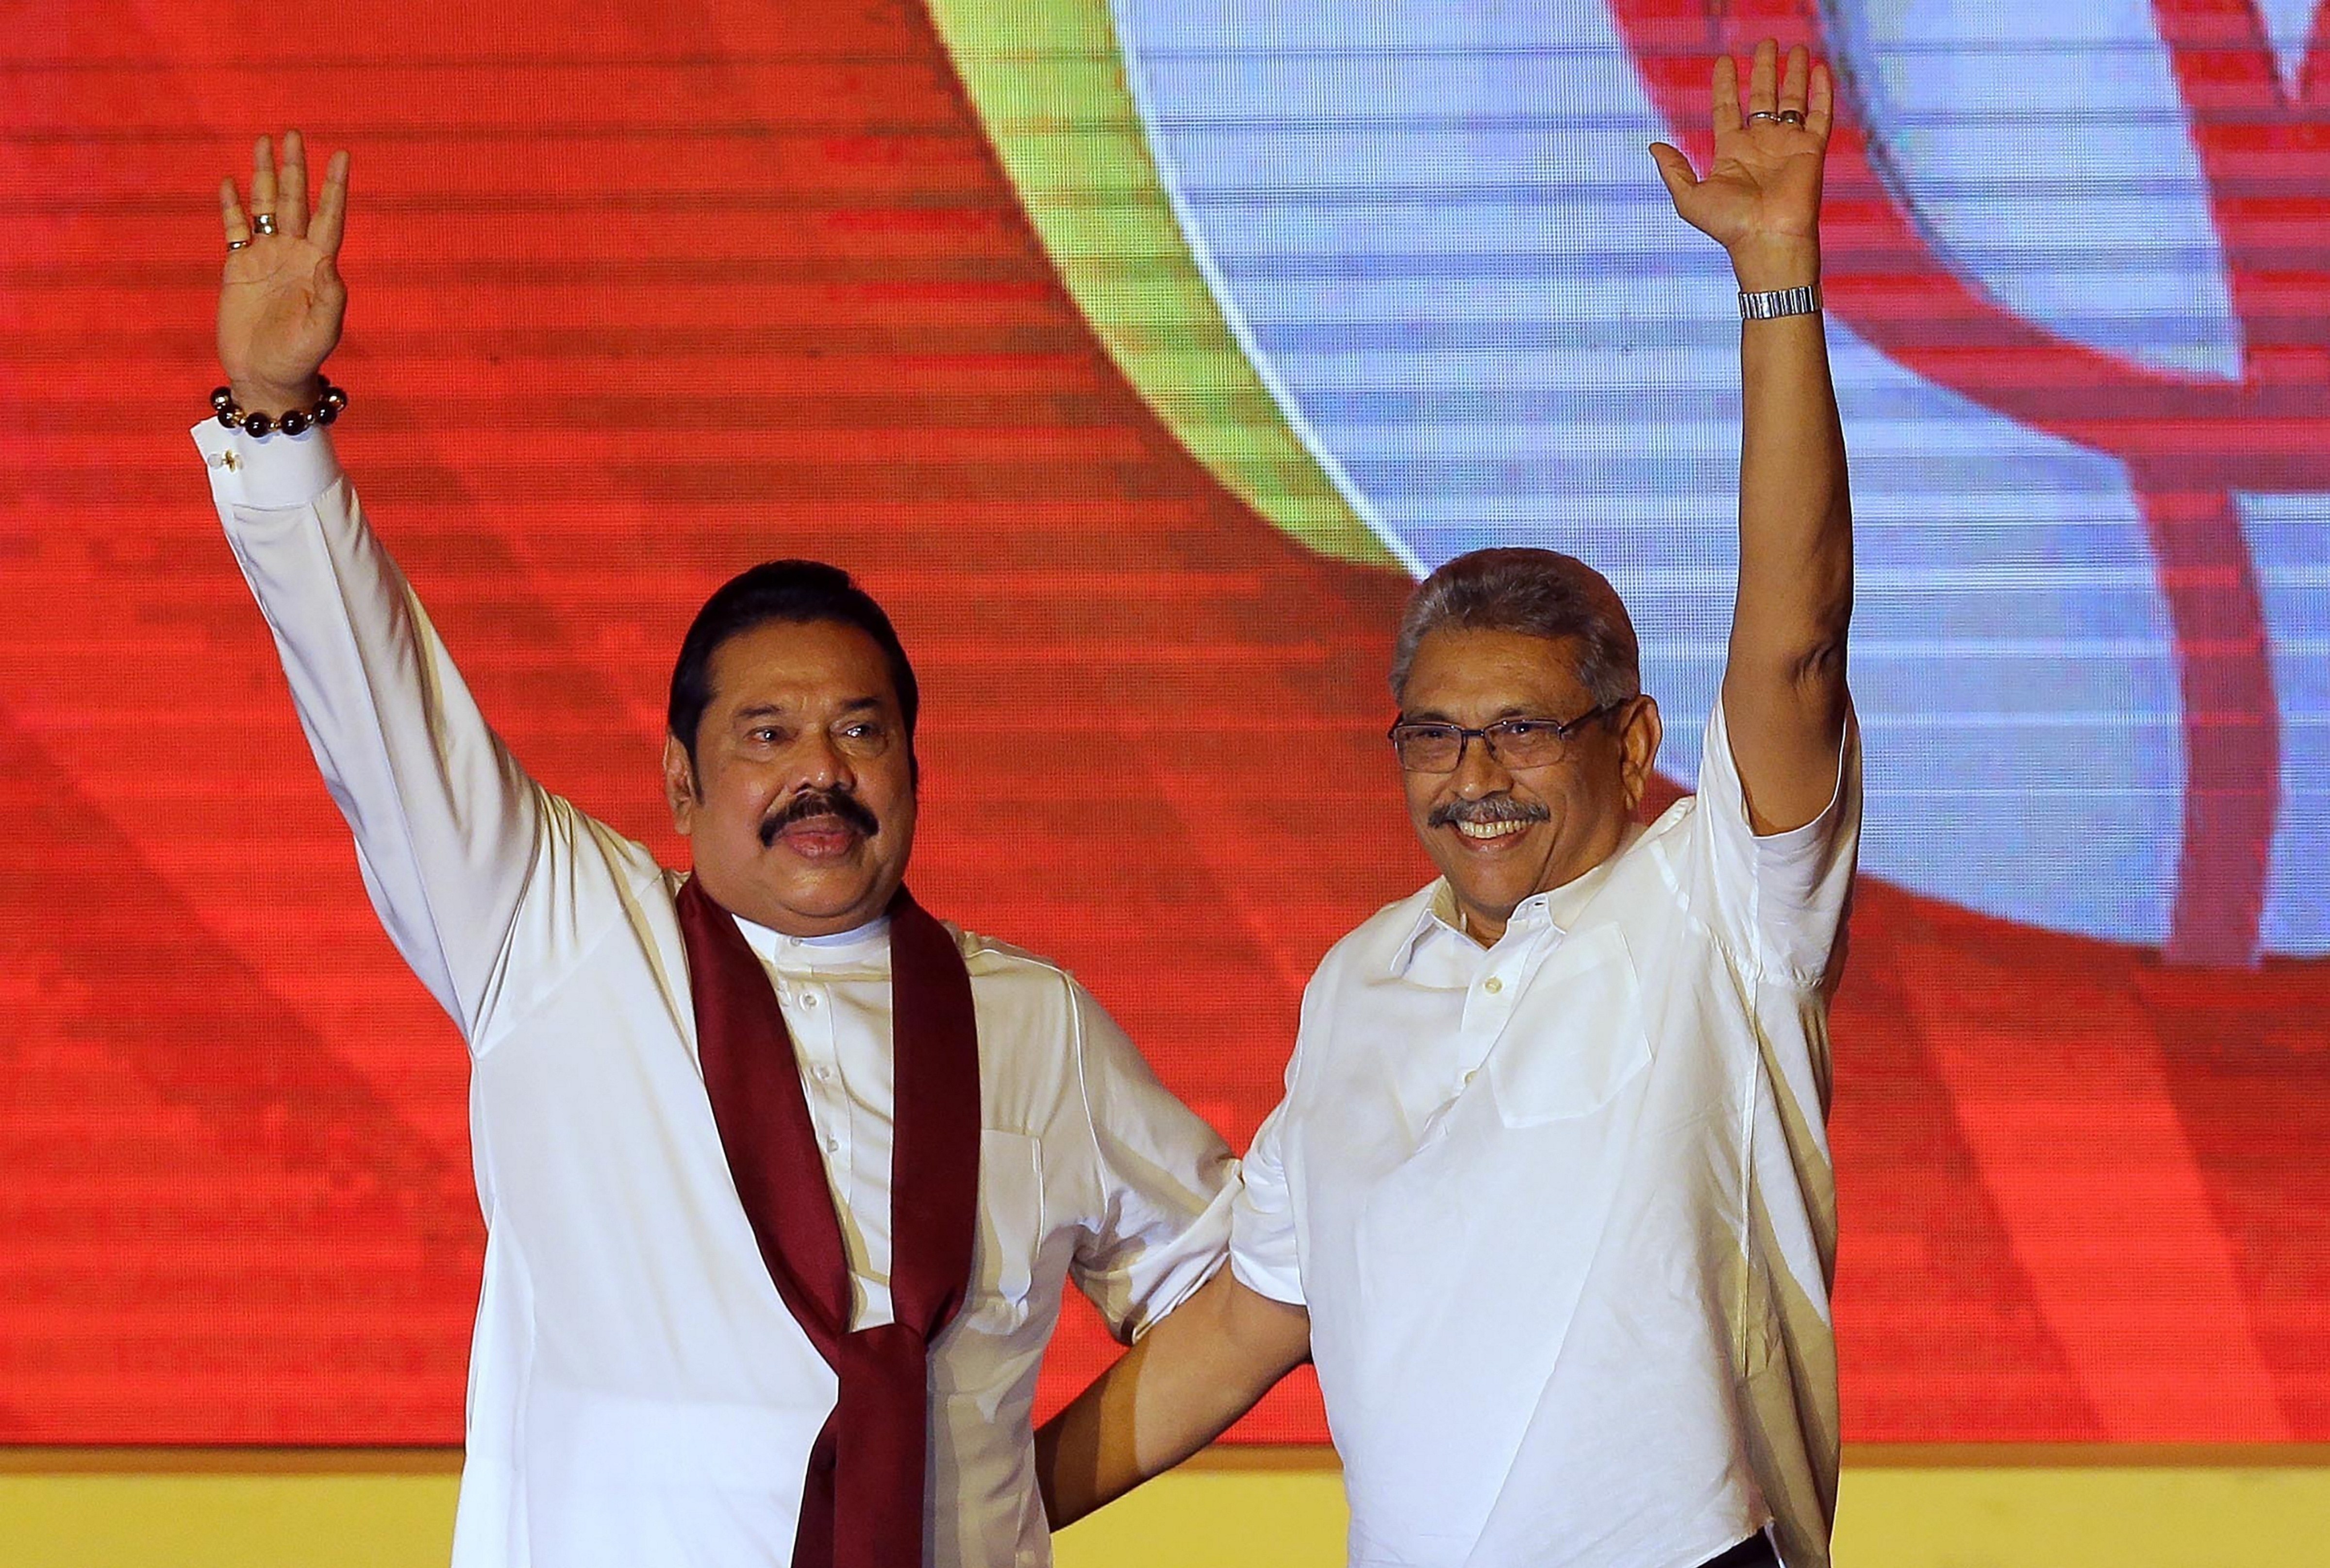 Lanka crisis: PM Mahinda Rajapaksa says he is ready to make 'any sacrifice' for people